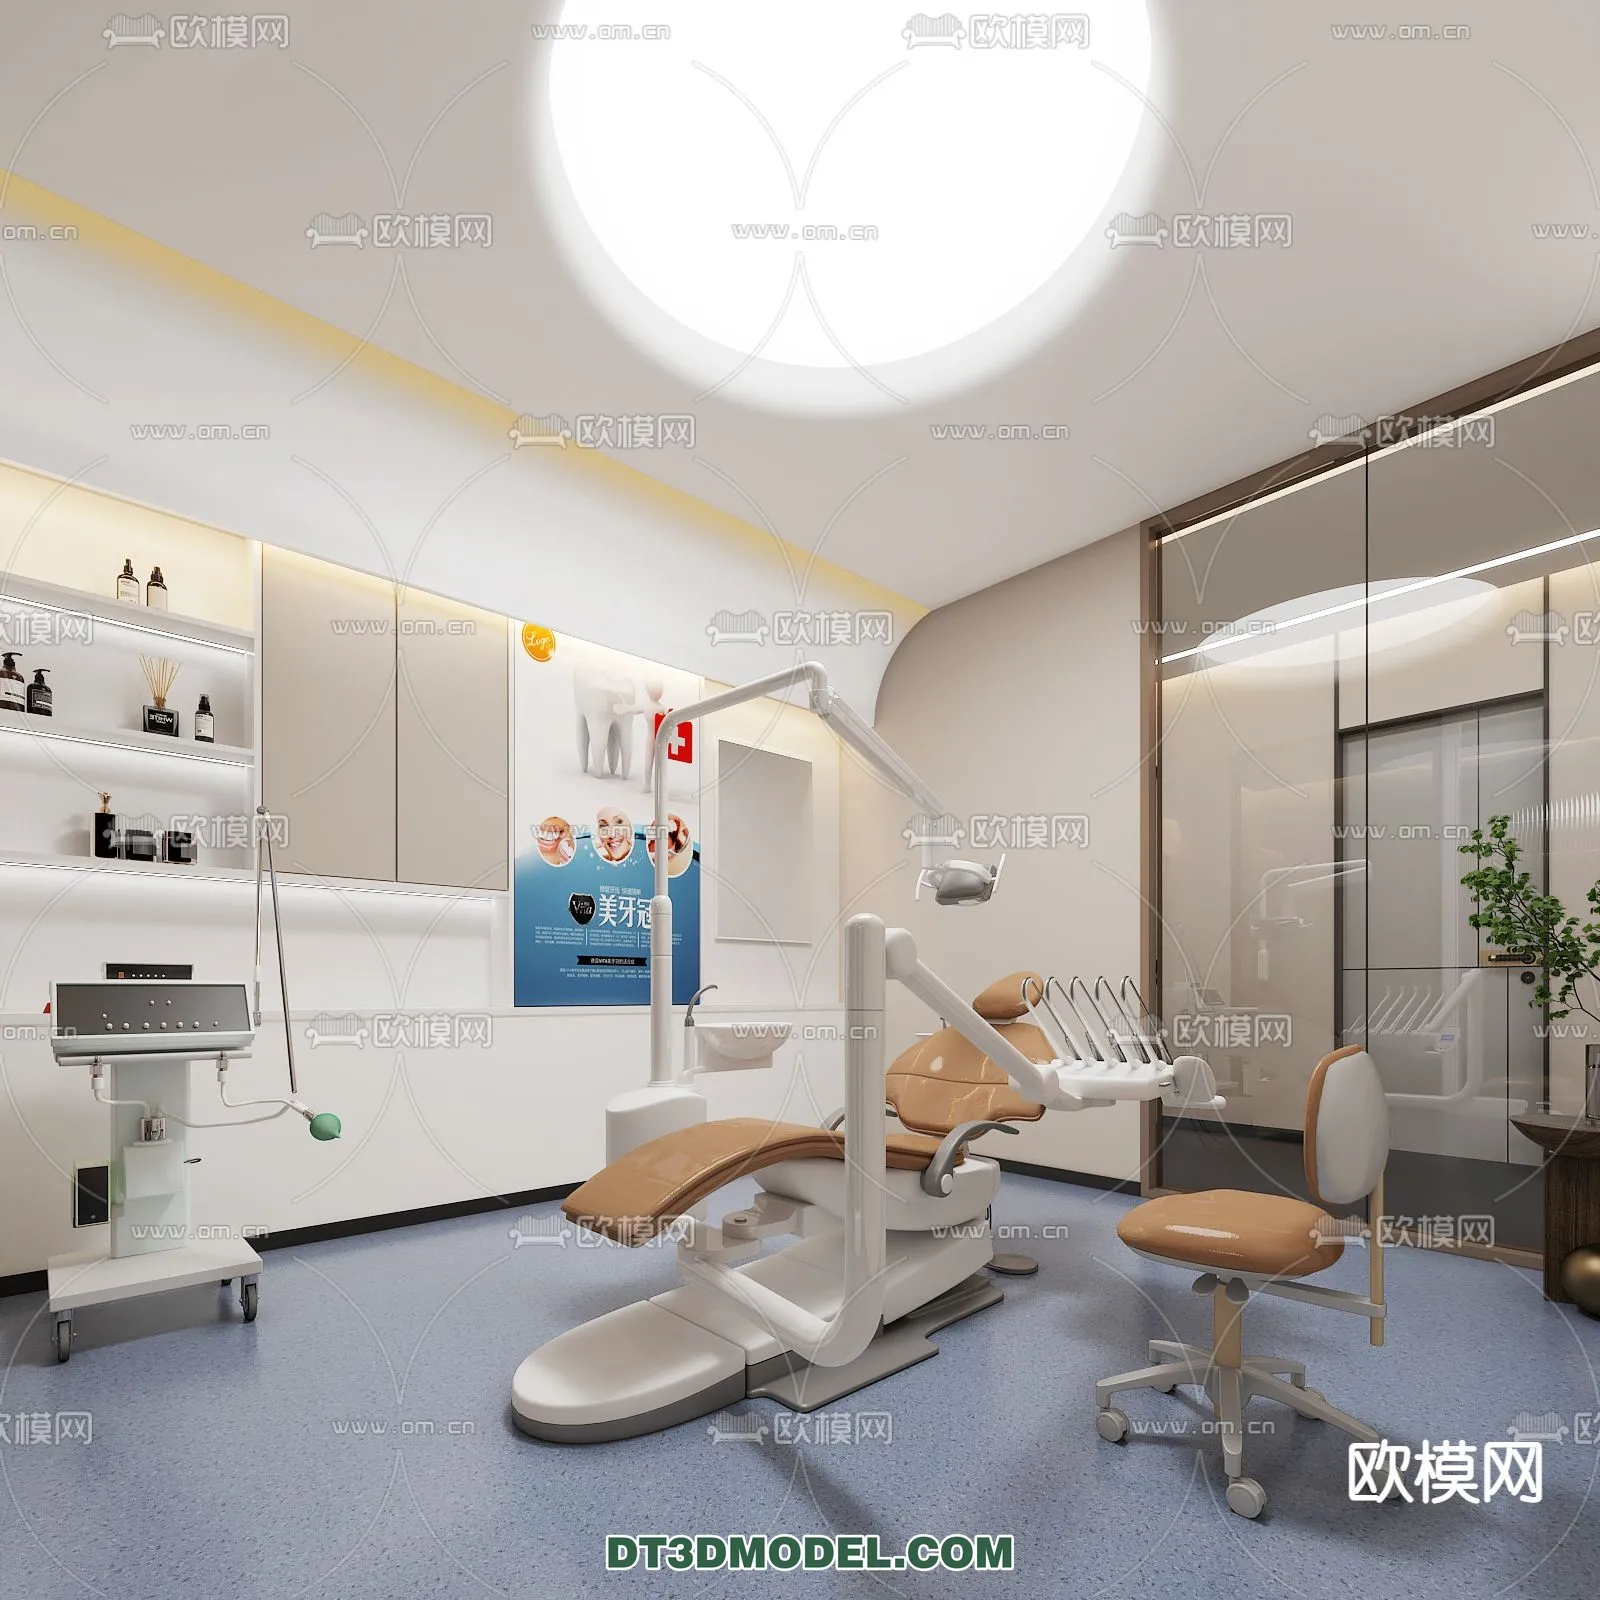 HOSPITAL 3D SCENES – MODERN – 0089